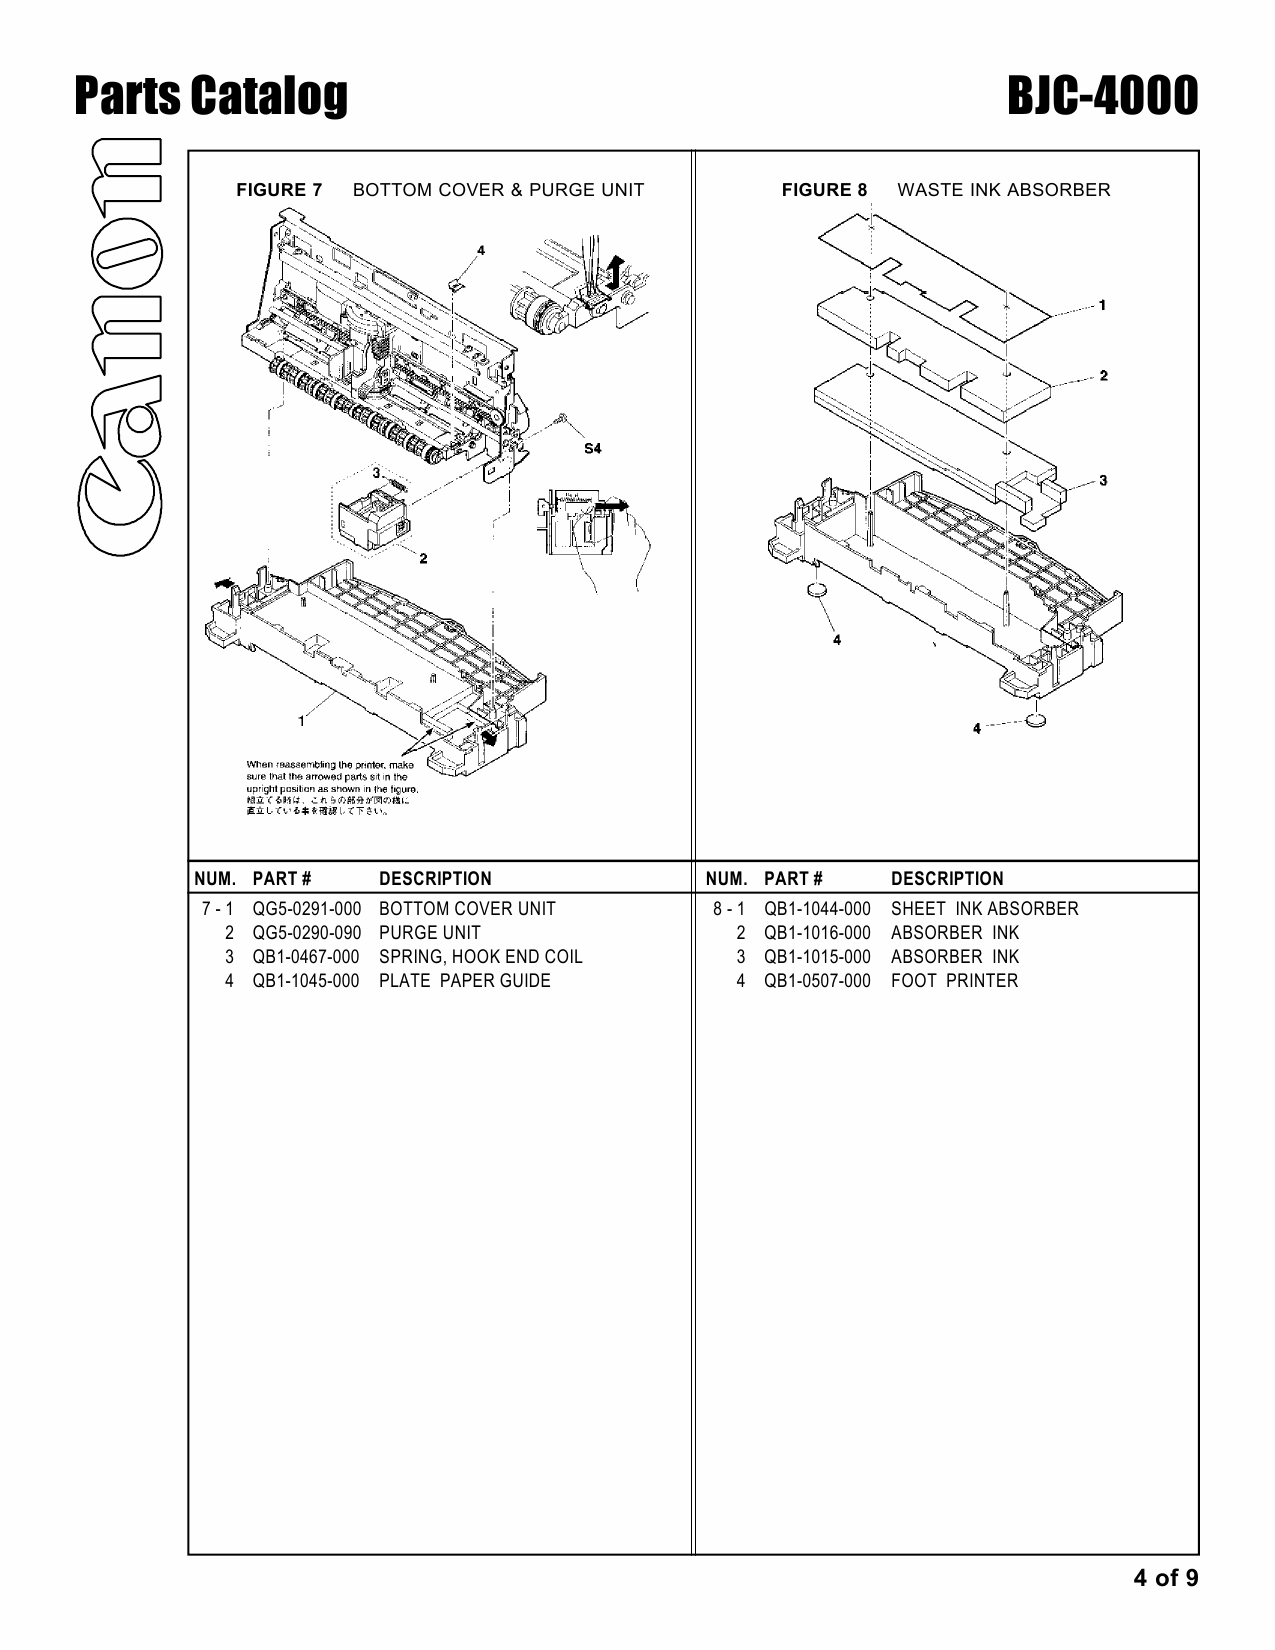 Canon BubbleJet BJC-4000 Parts Catalog Manual-4